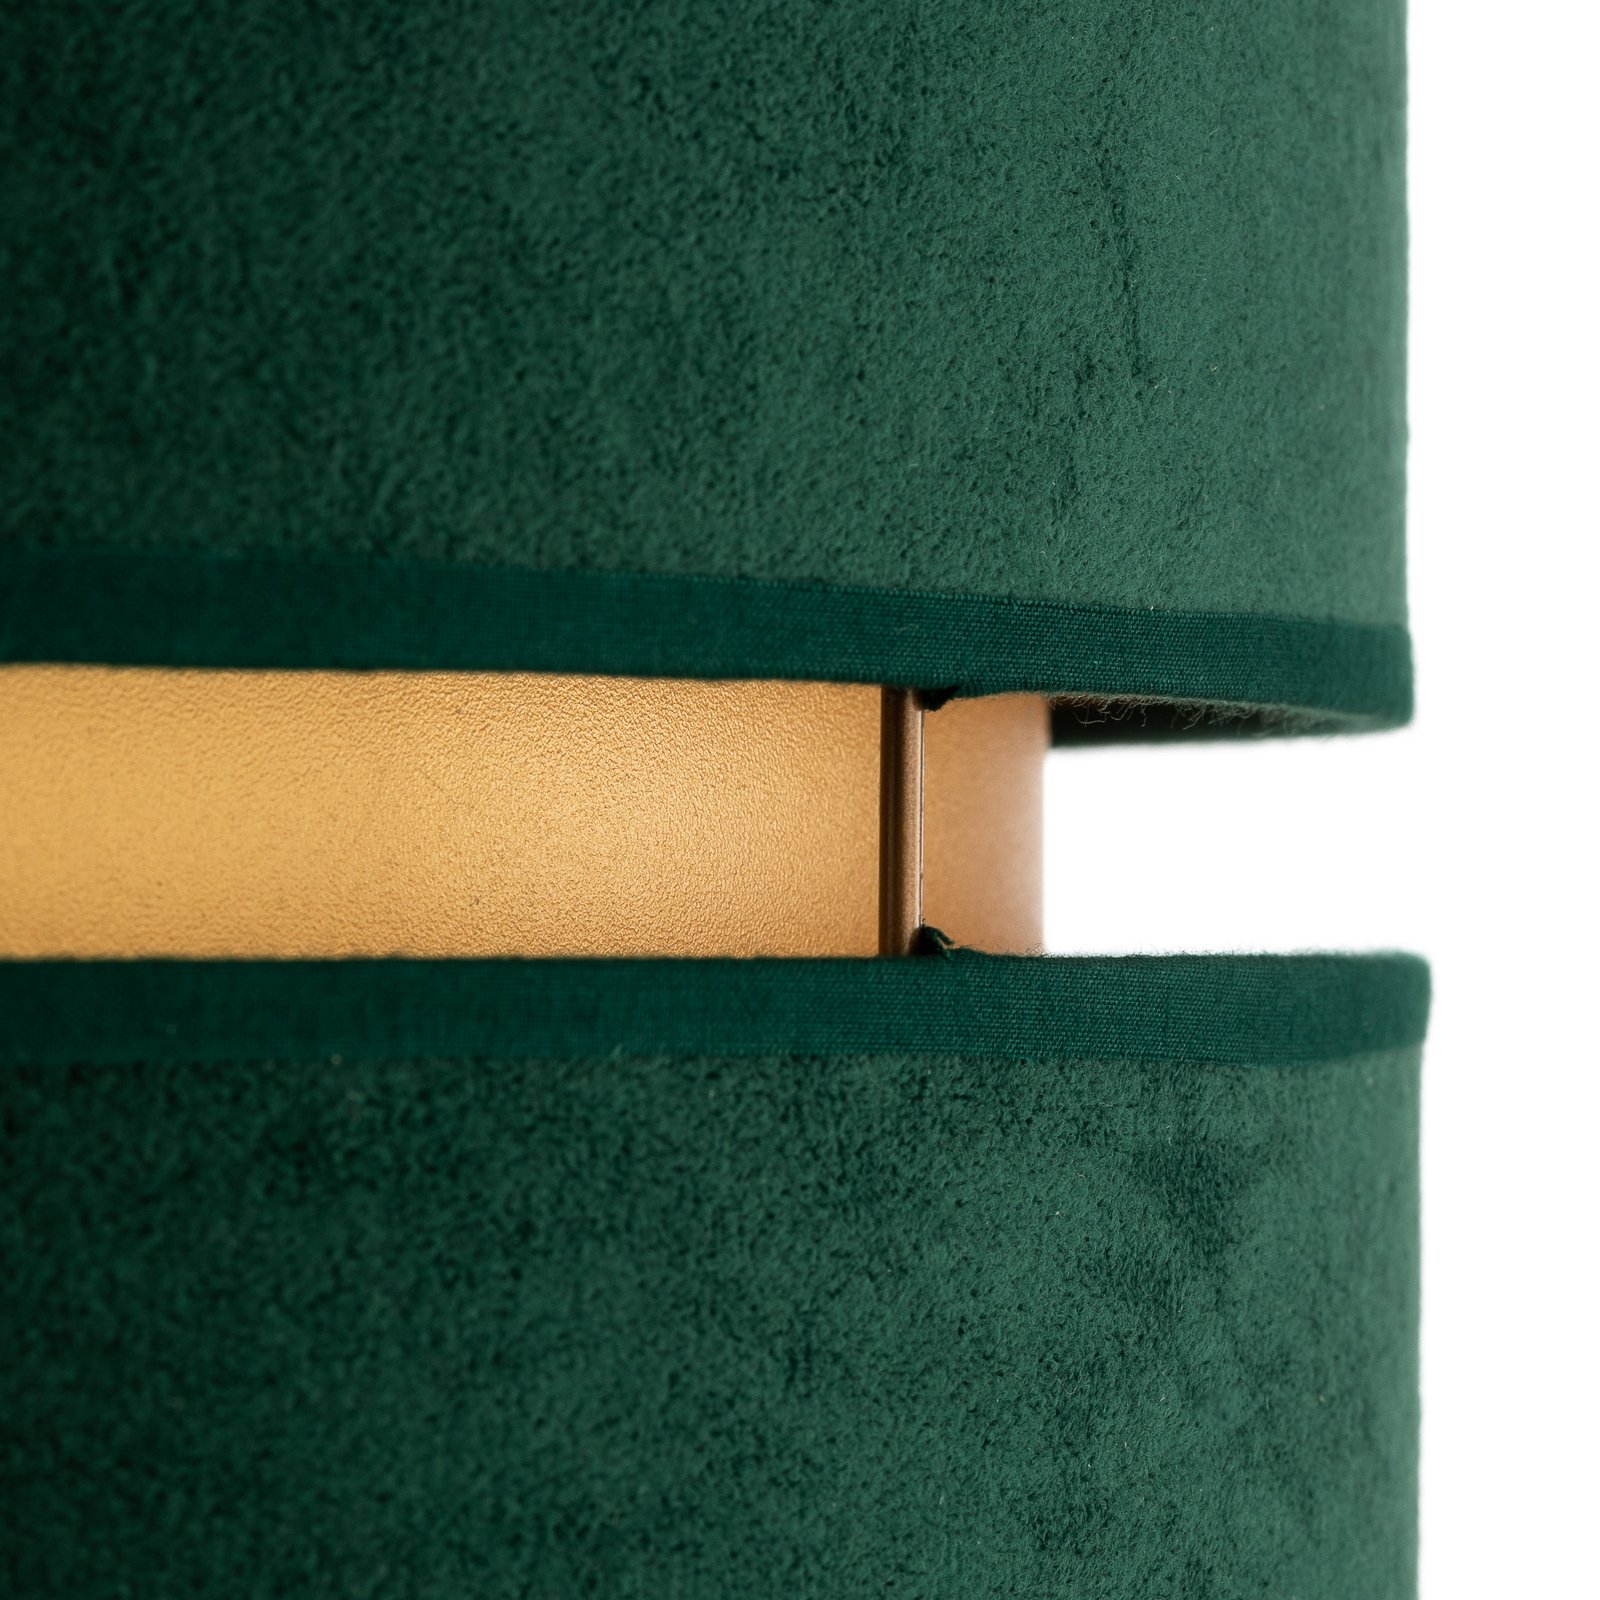 Euluna Duo taklampa av textil, grön/guld, Ø45cm